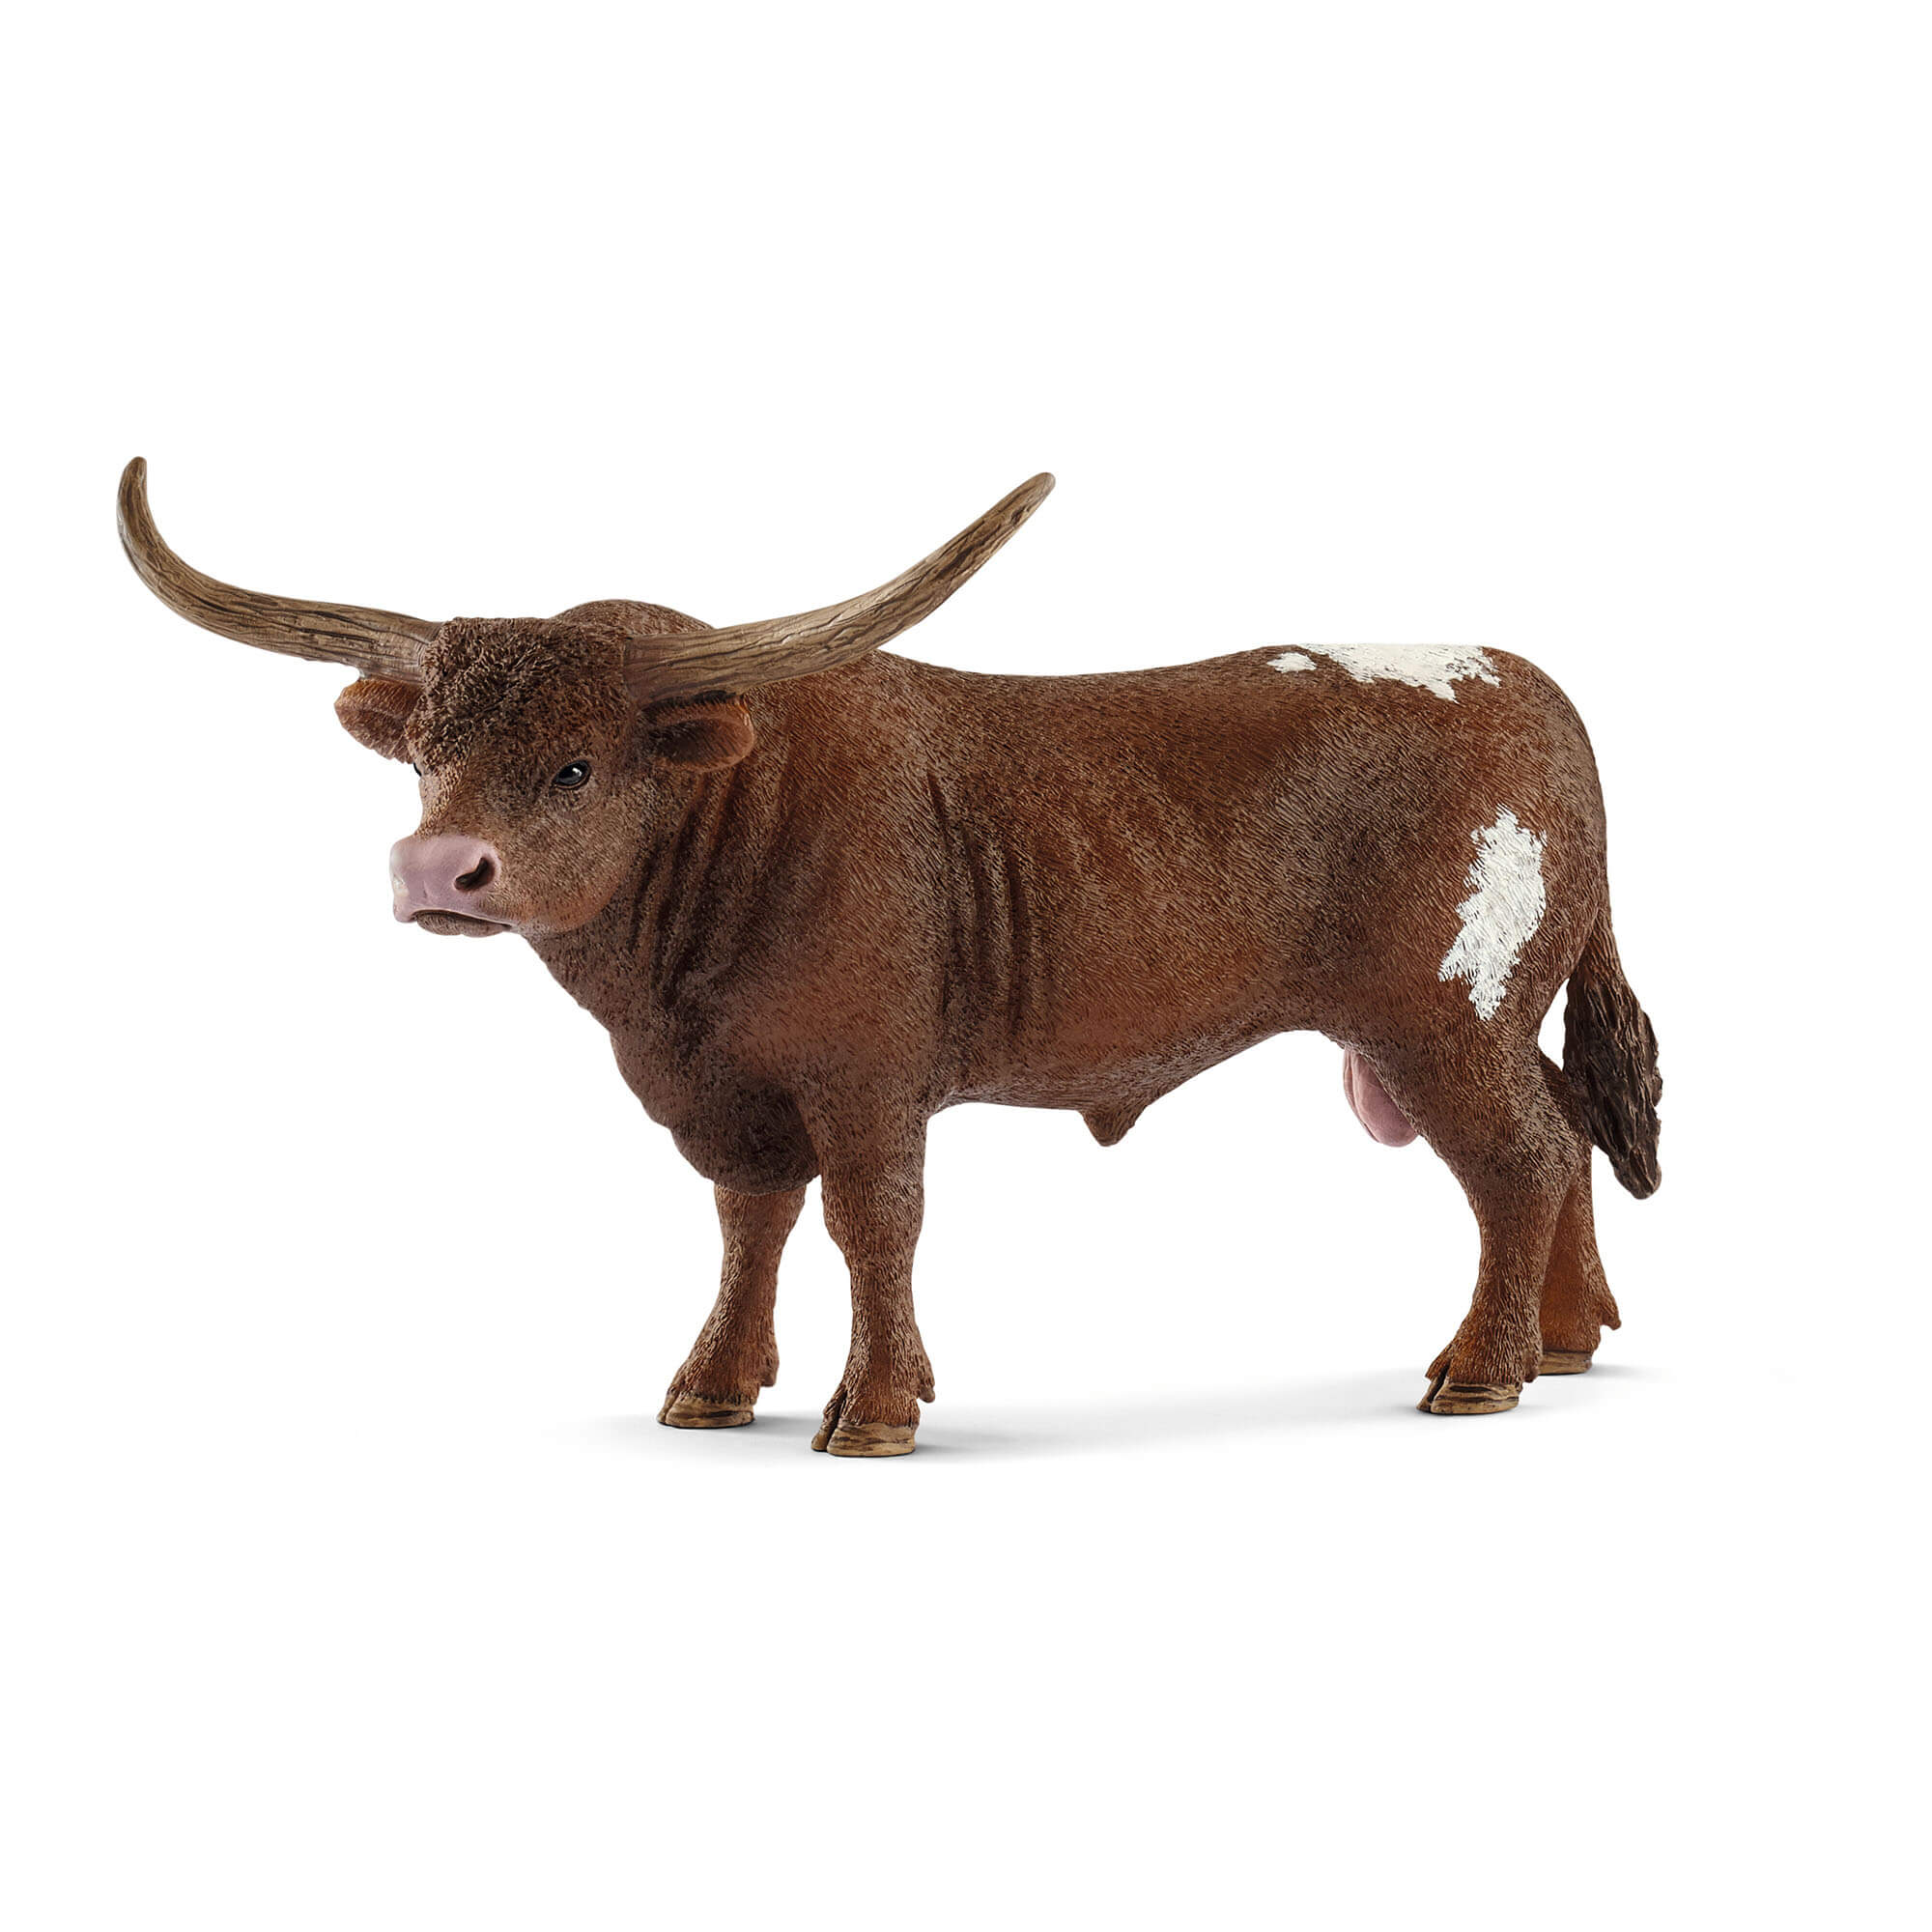 Schleich Farm World Texas Longhorn Bull Animal Figure